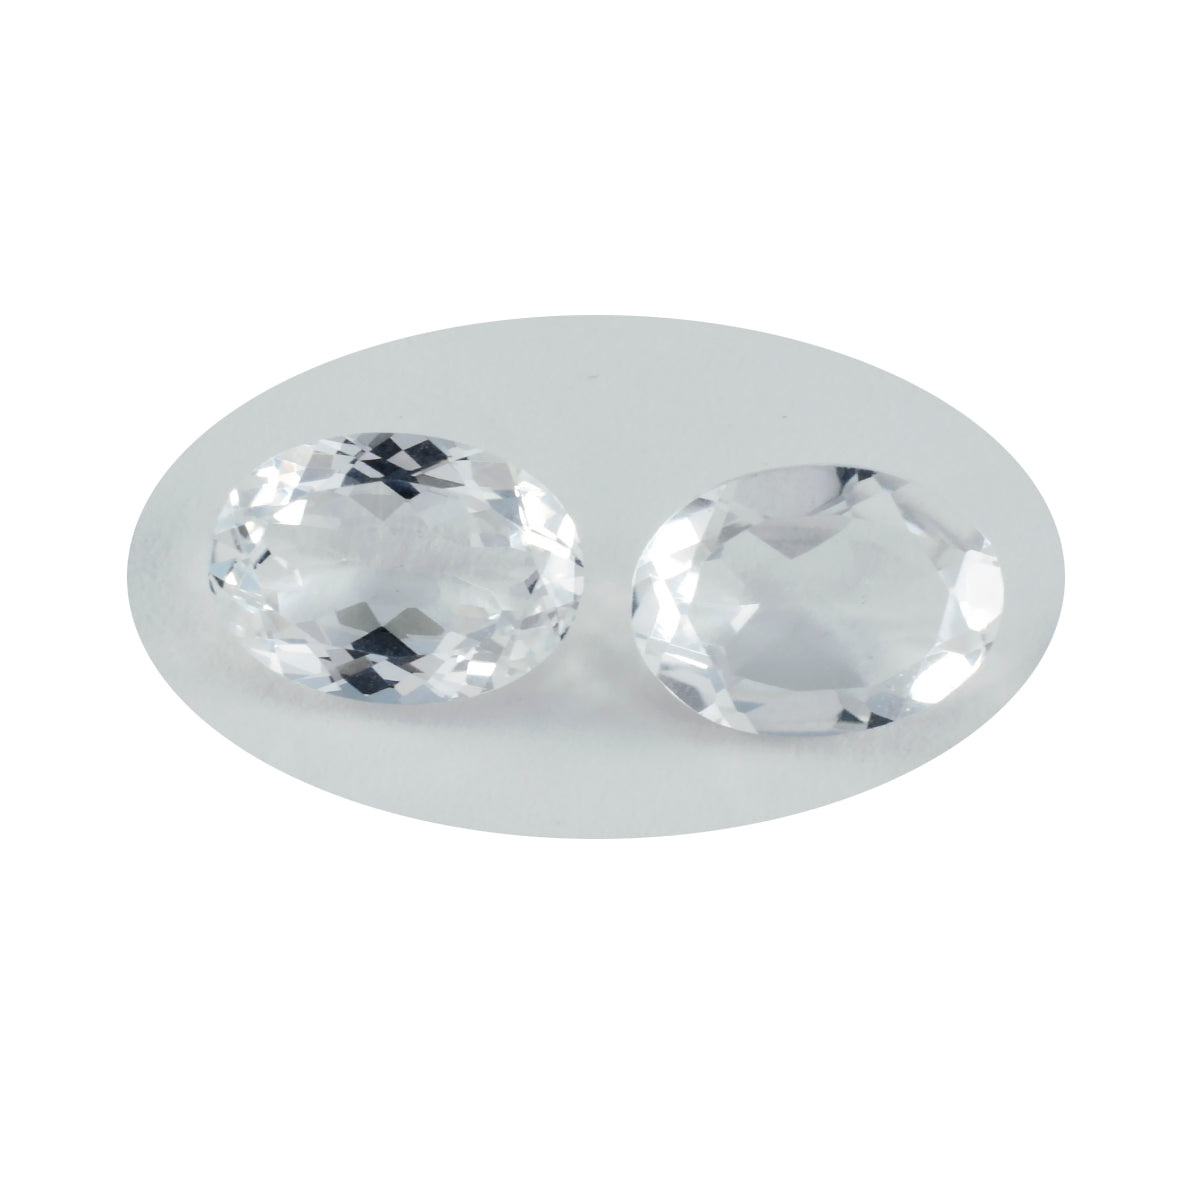 Riyogems 1PC wit kristalkwarts gefacetteerd 10x12 mm ovale vorm mooie kwaliteit losse edelstenen